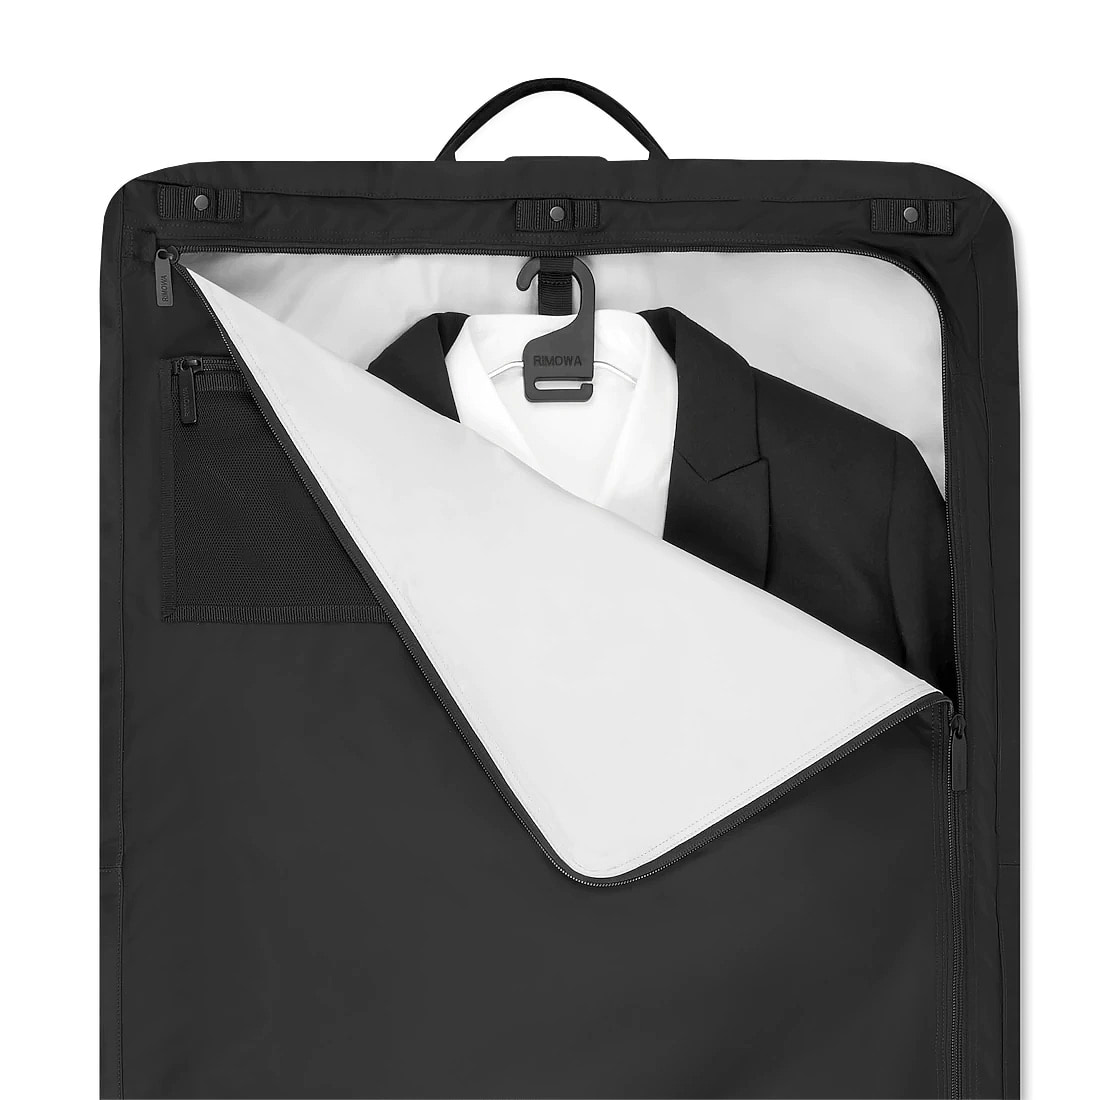 Best Travel Garment Bags of 2023